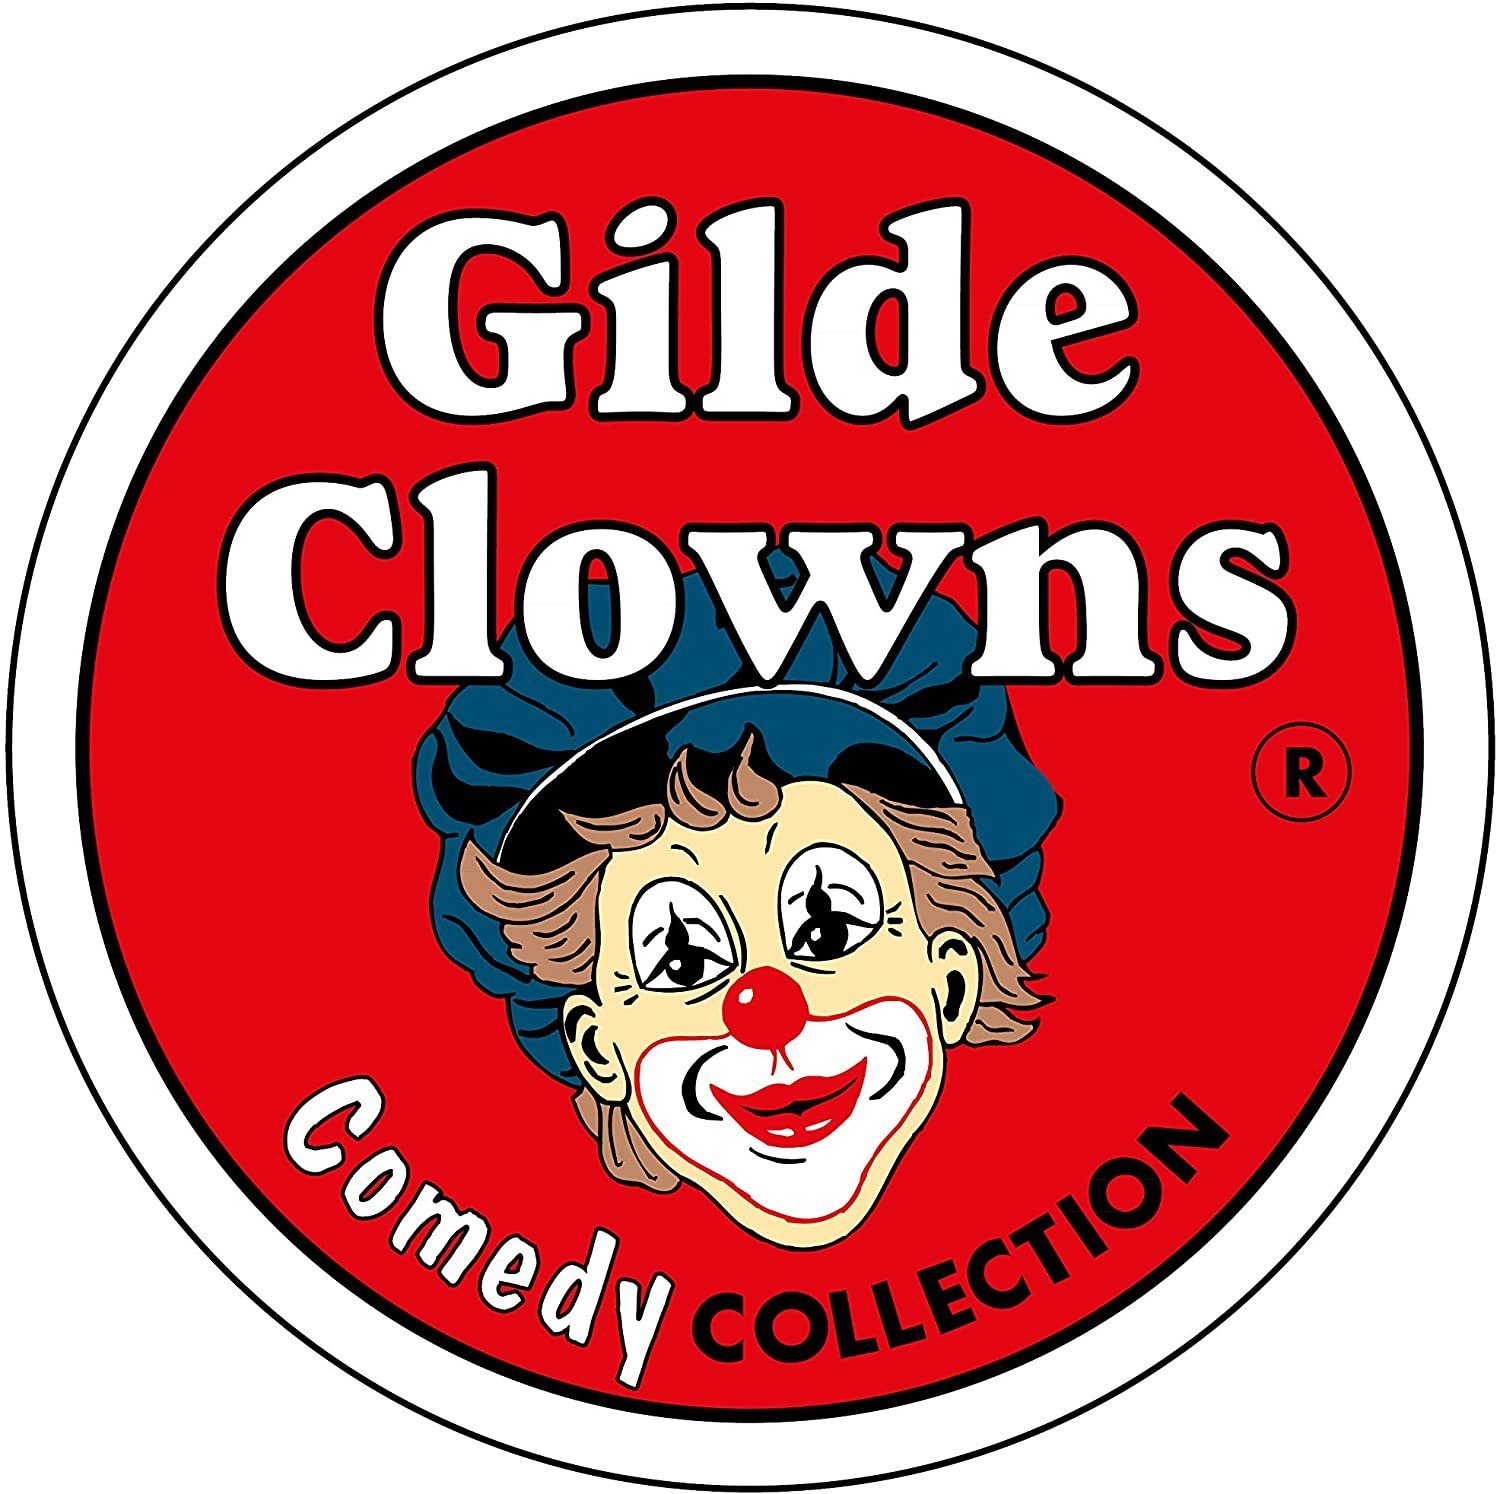 Dekofigur Indoor Florian Gildeclowns Clown Sammelfigur GILDE - -